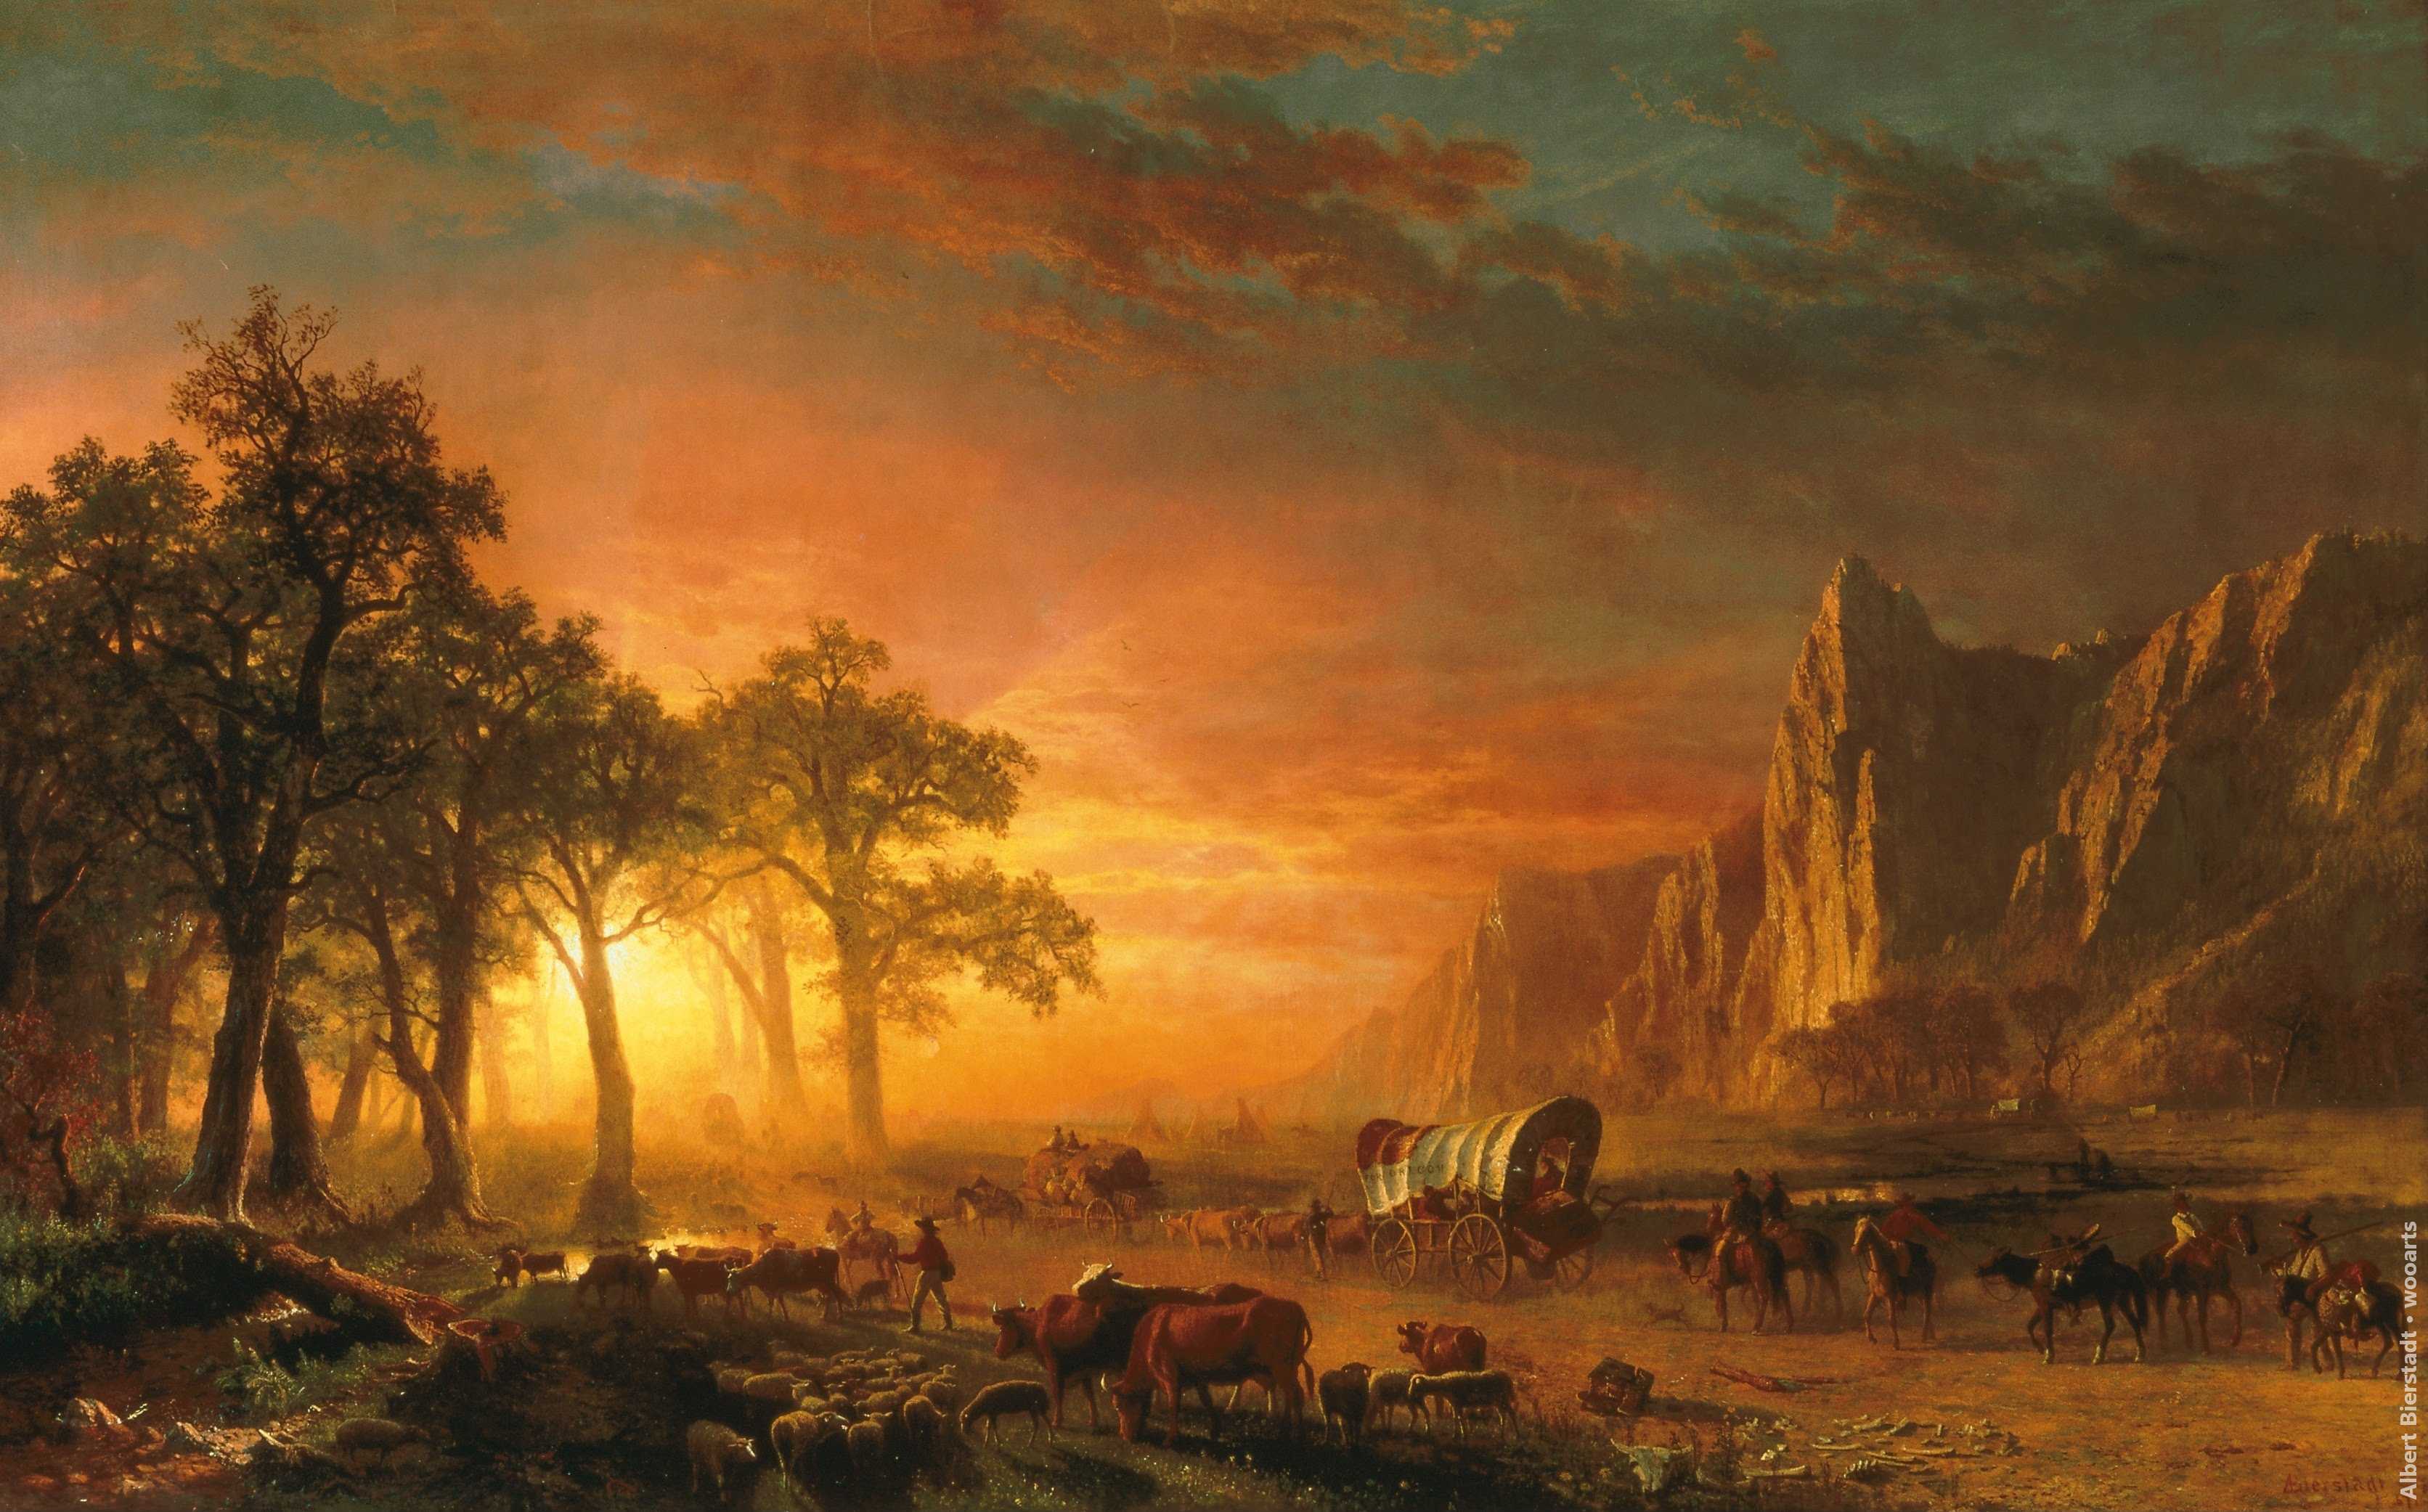 Albert Bierstadt - Emigrants Crossing the Plains Painting